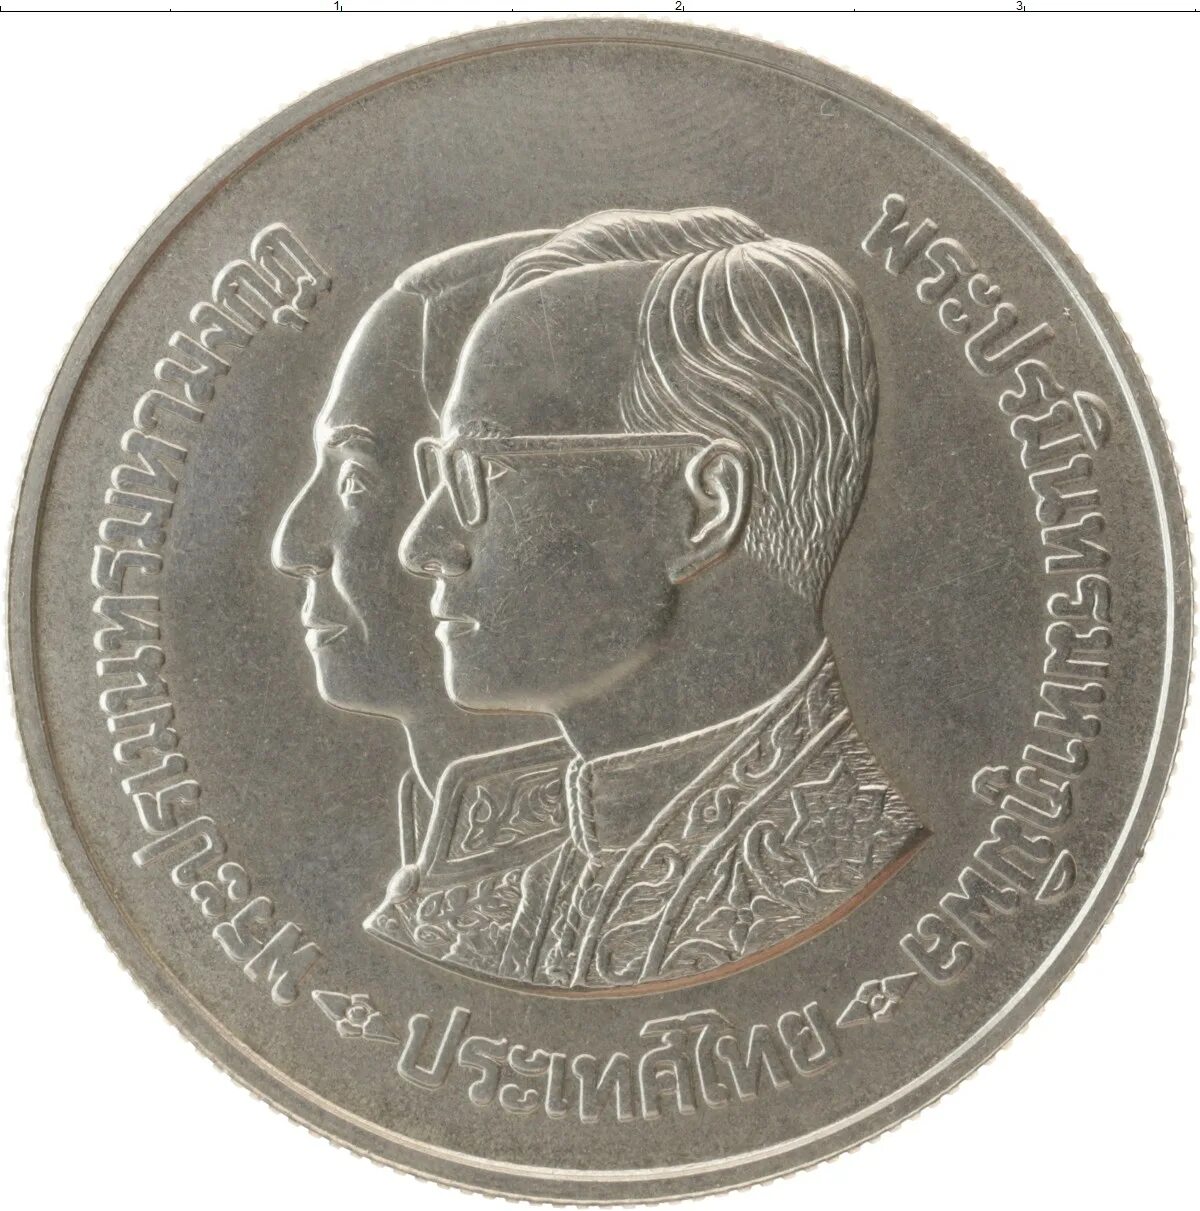 600 бат. 600 Бат Таиланд монета серебро. Таиланд монета 10 бат 1981 35 лет царствованию рамы IX. 600 Батов.